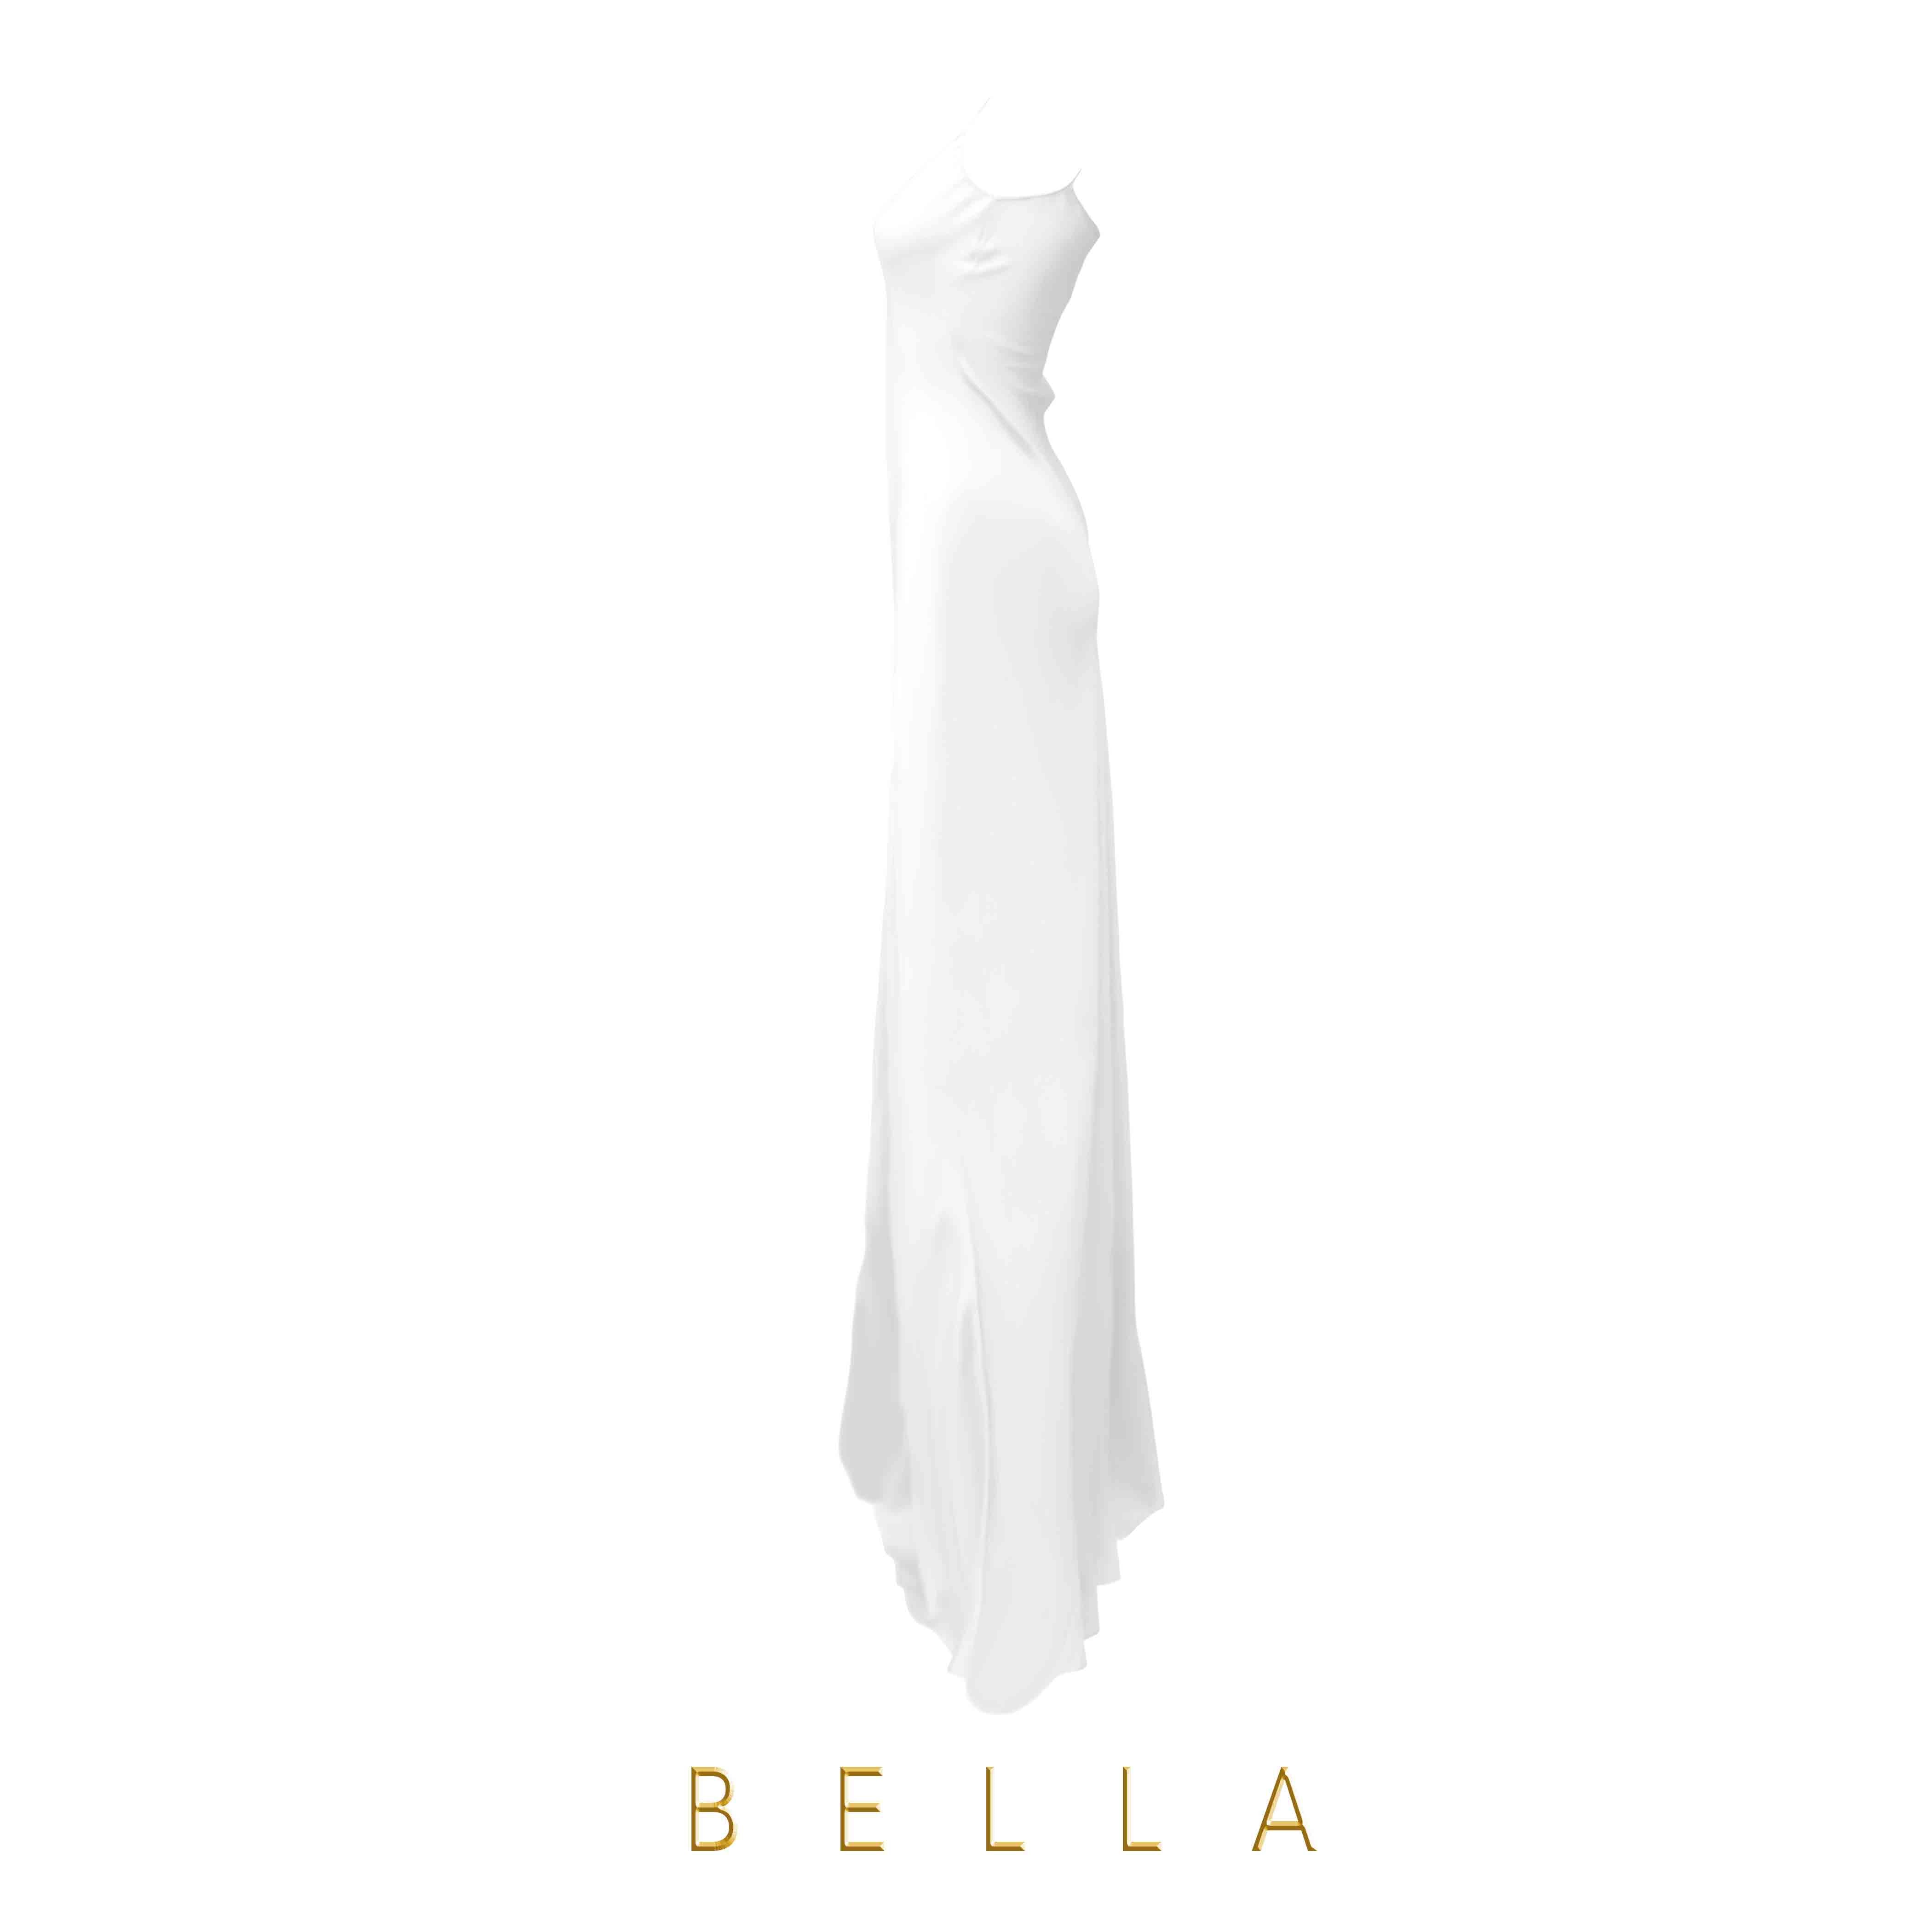 The Bella - Blank Canvas - Vibe #1